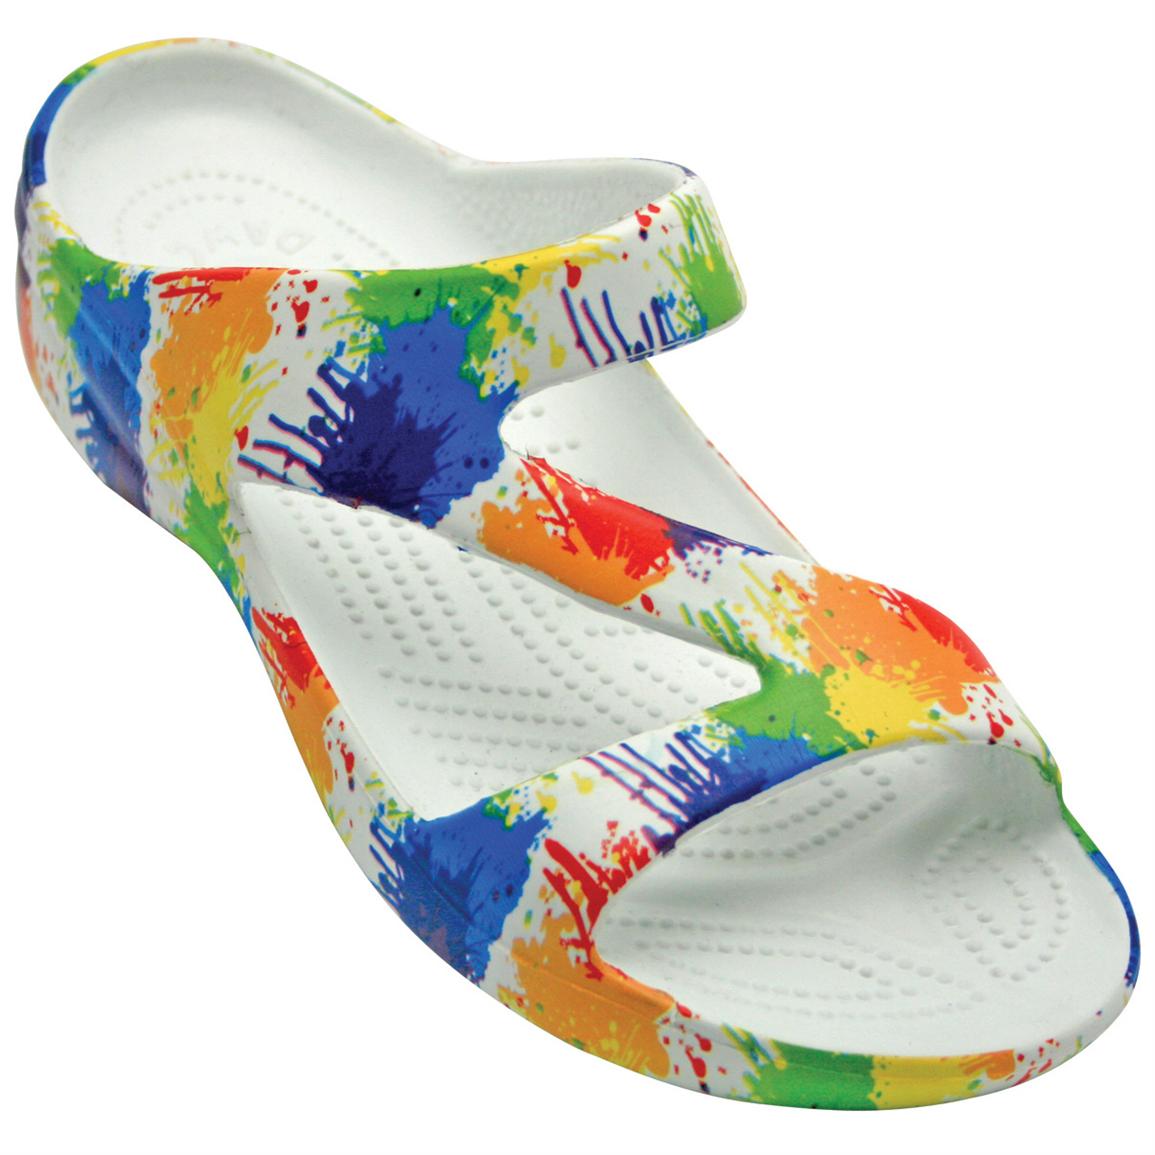 Women's Dawgs® LoudMouth Z Sandals - 583664, Sandals & Flip Flops at Sportsman's Guide1155 x 1155